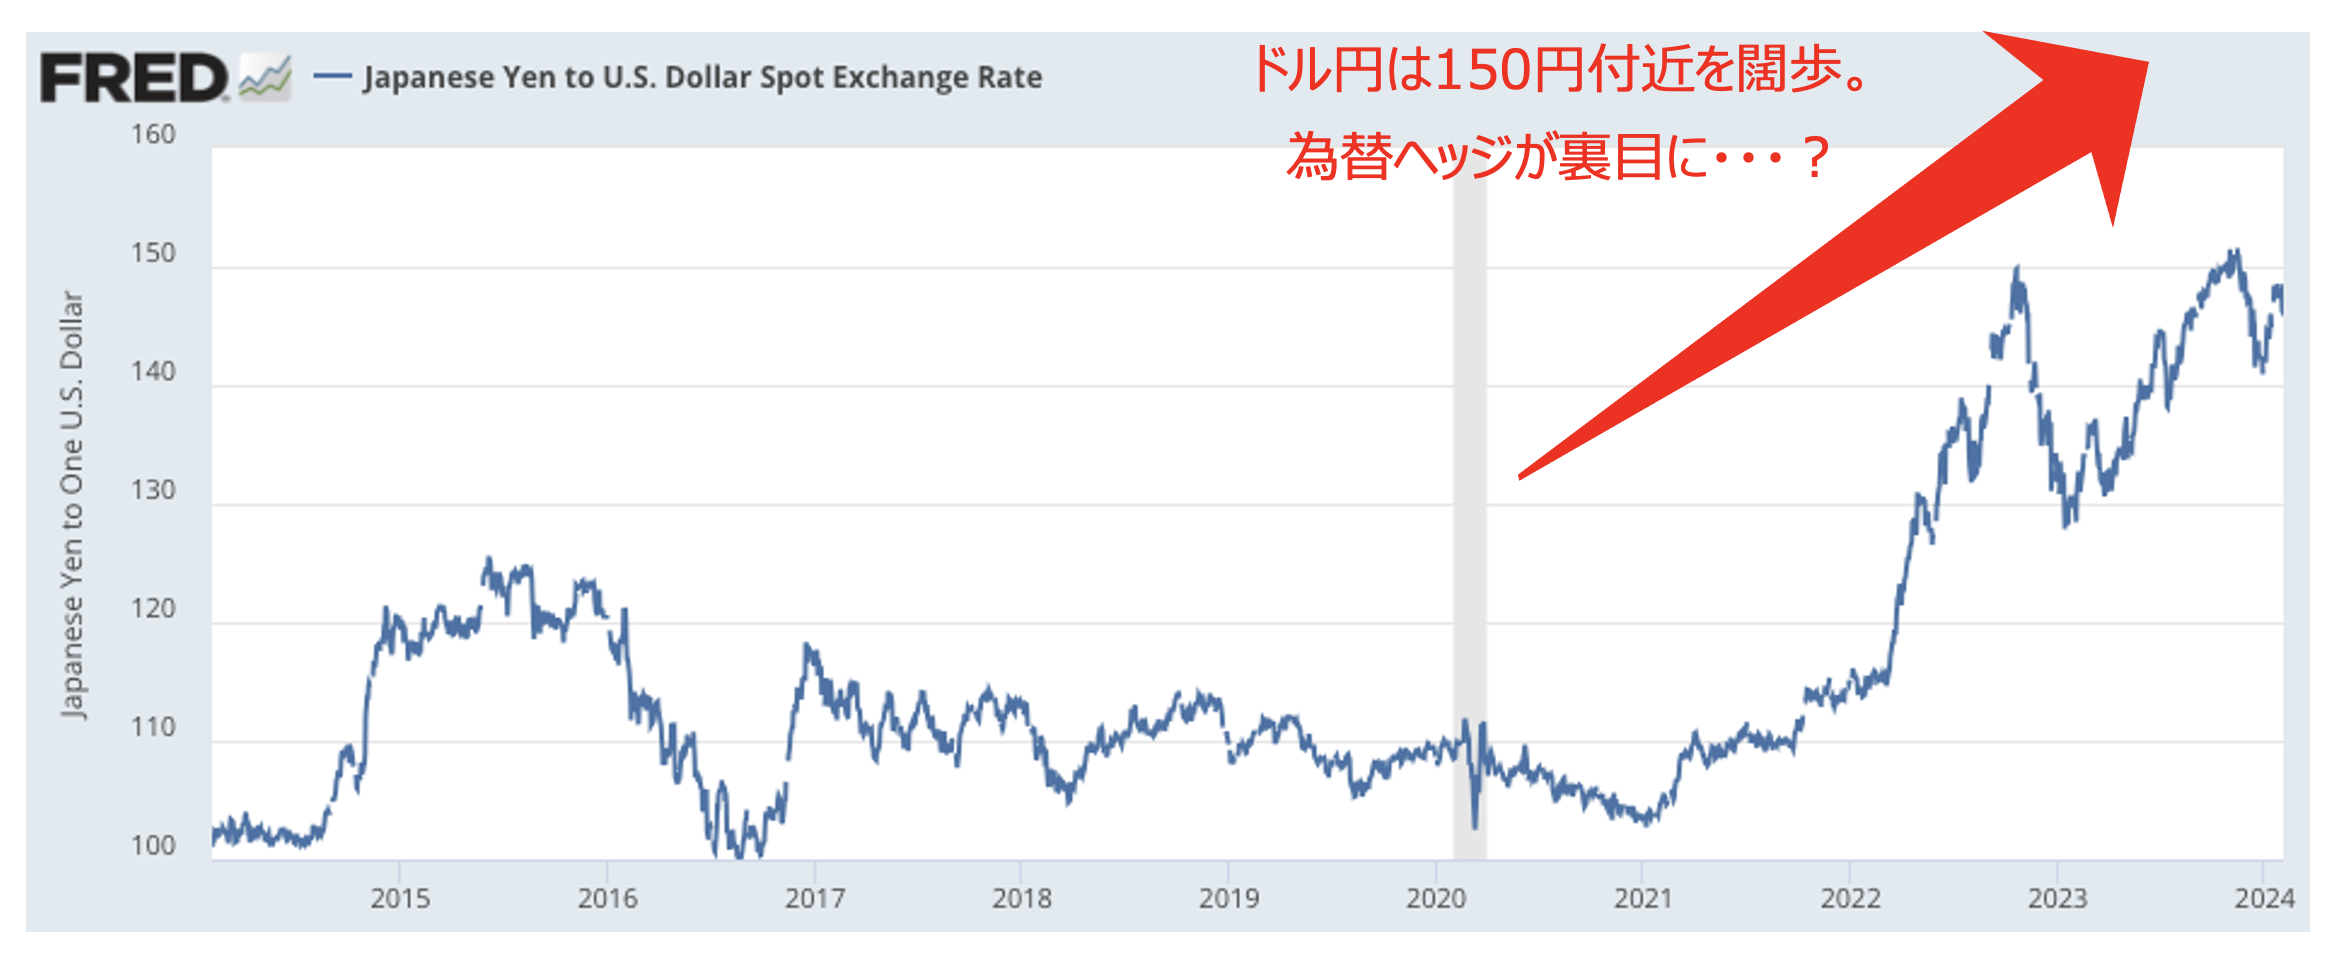  Japanese Yen to U.S. Dollar Spot Exchange Rate (DEXJPUS)